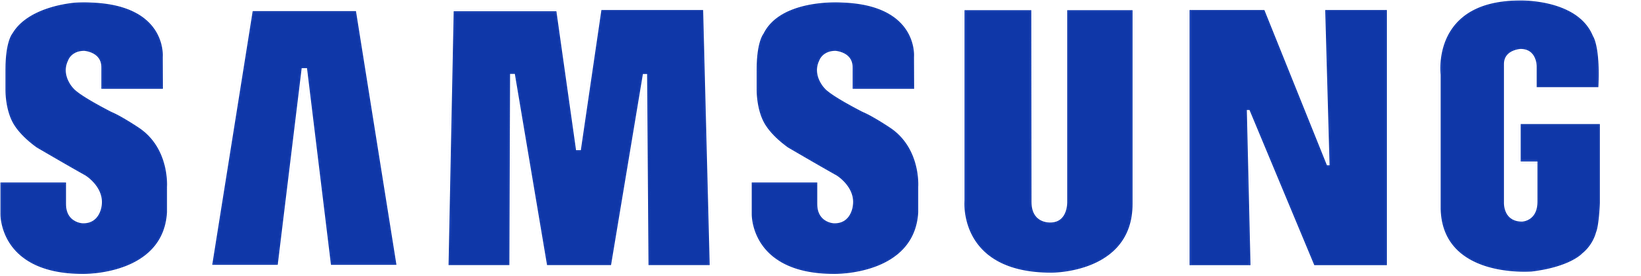 Samsung Logo PNG - 33067